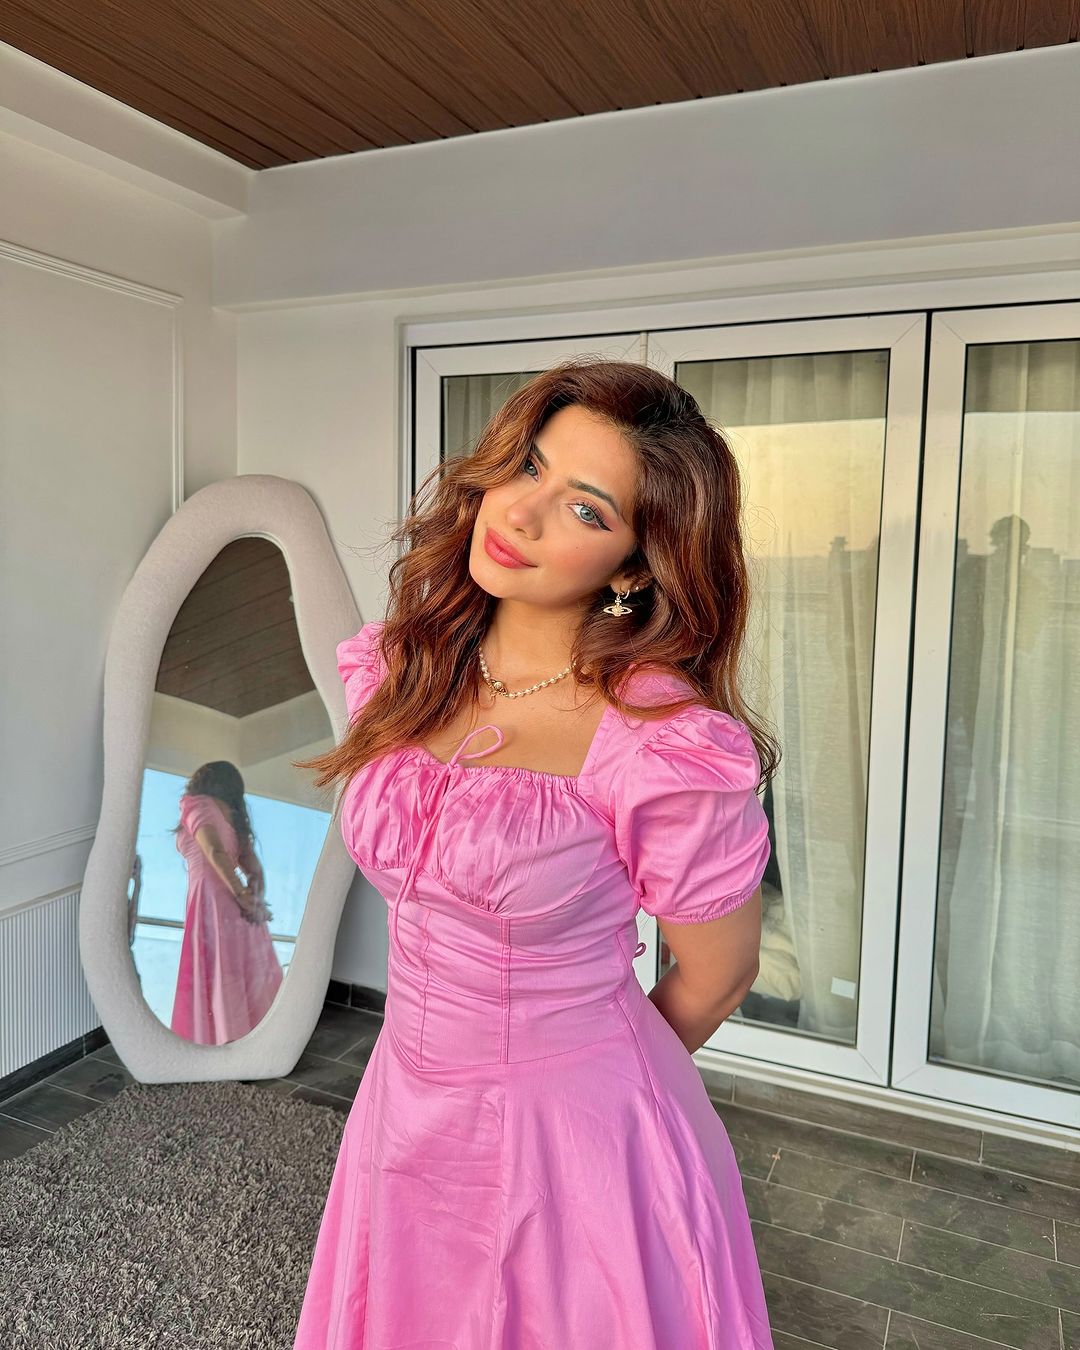 Nagma Mirajkar's Bubble Gum Pink Dress Is Effortlessly Chic